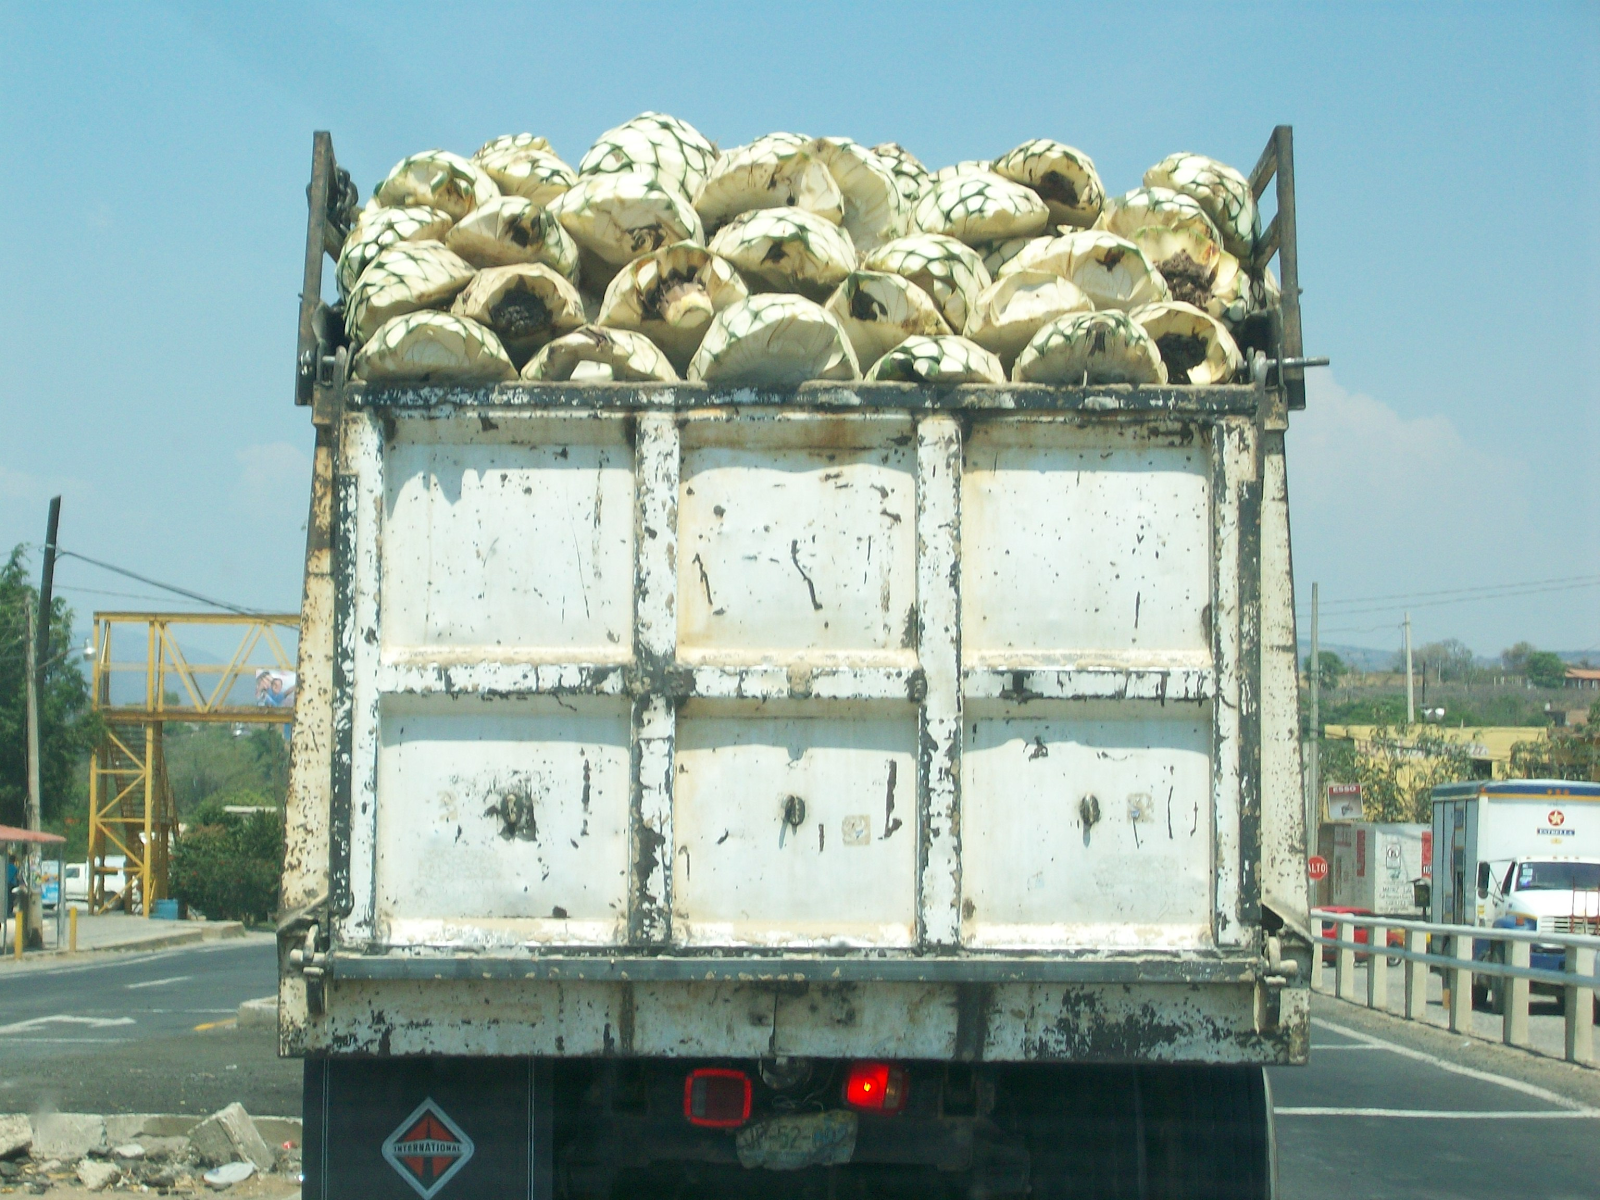 truck of piña